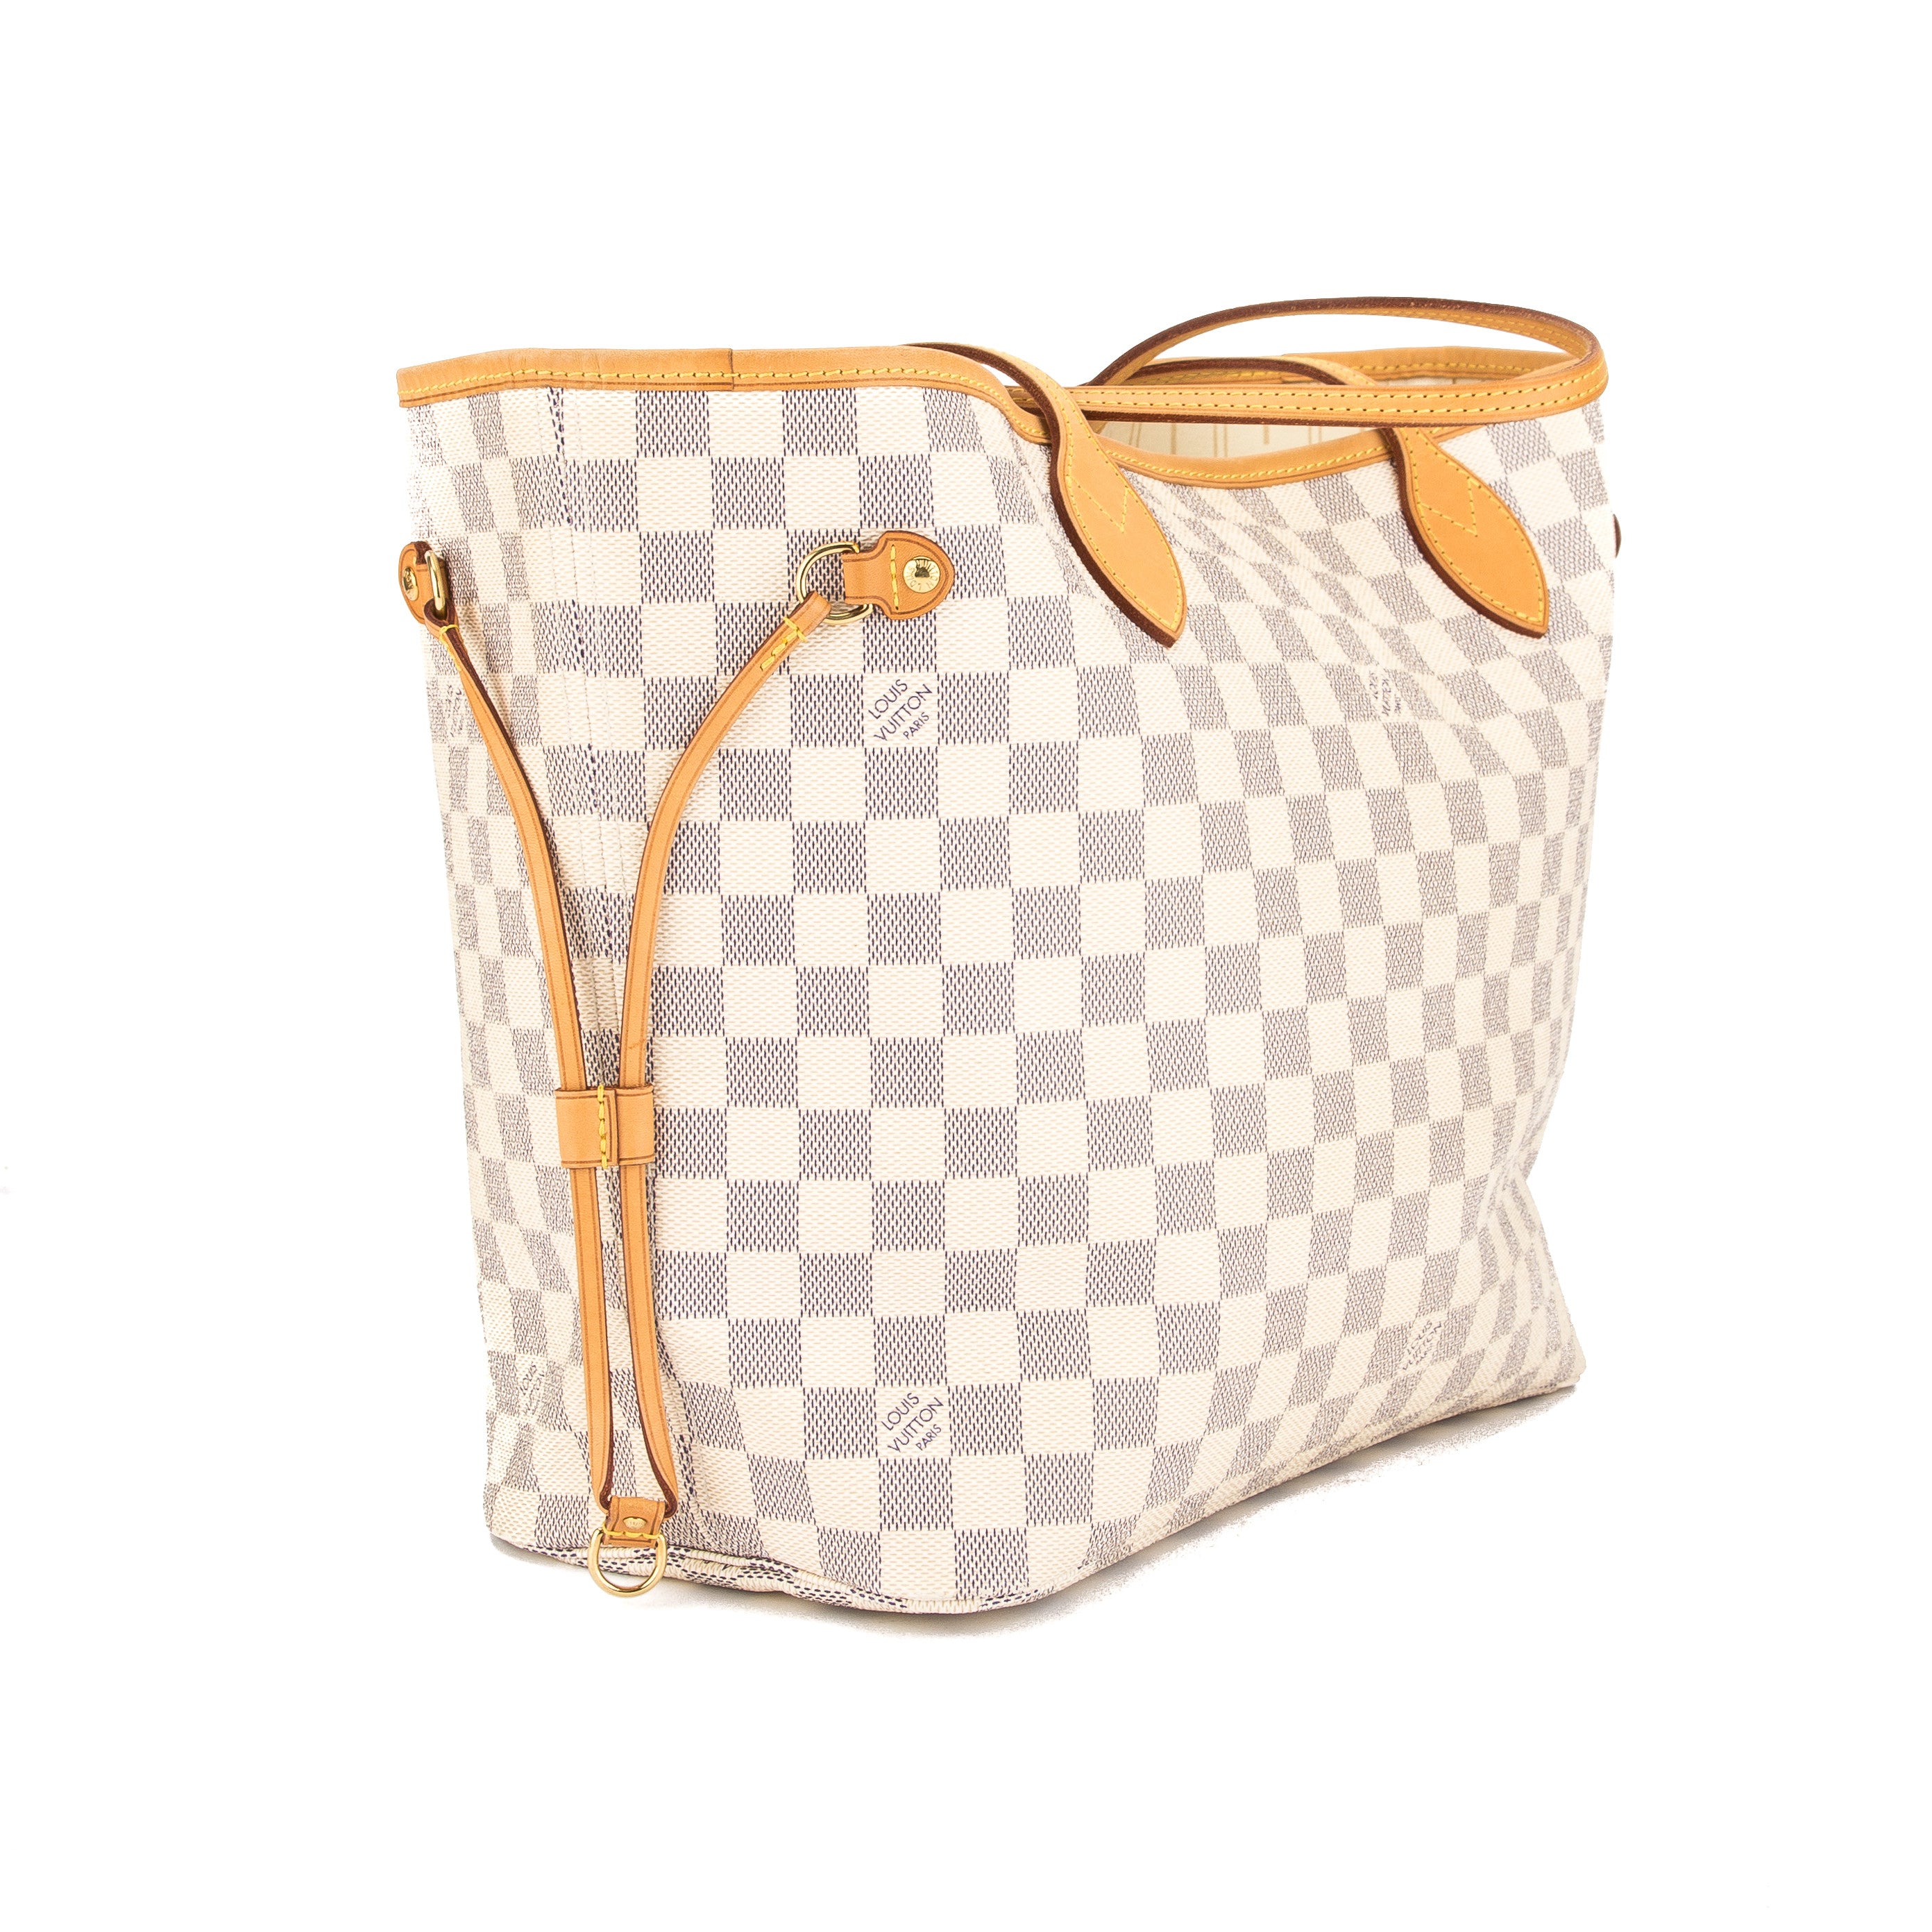 Louis Vuitton Damier Azur Canvas Neverfull MM Bag (Pre Owned) | eBay